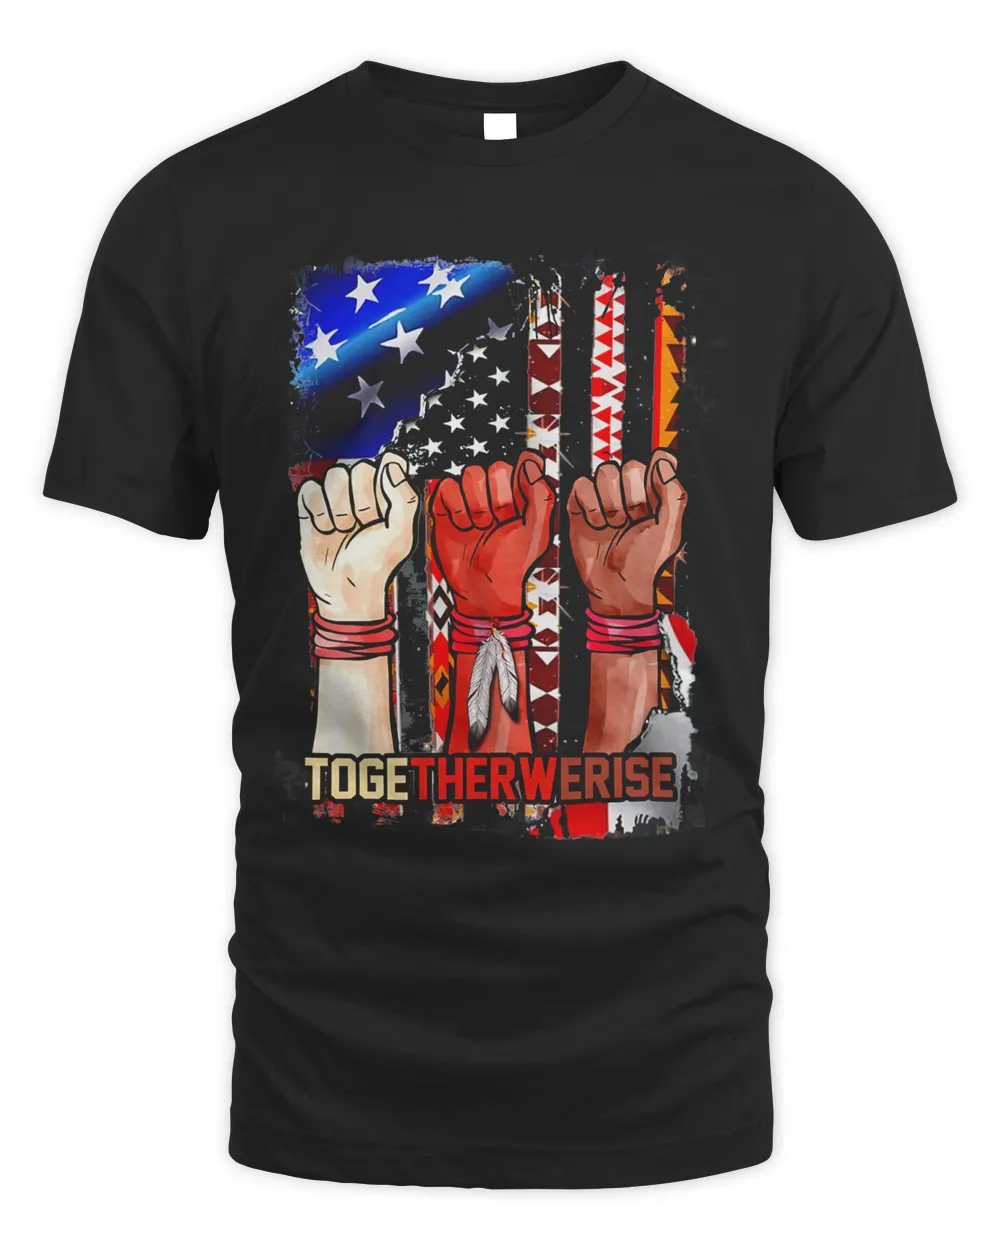 Black Live Matter Strong Hands Together We Rise American Flag Shirt Unisex Standard T-Shirt black xl